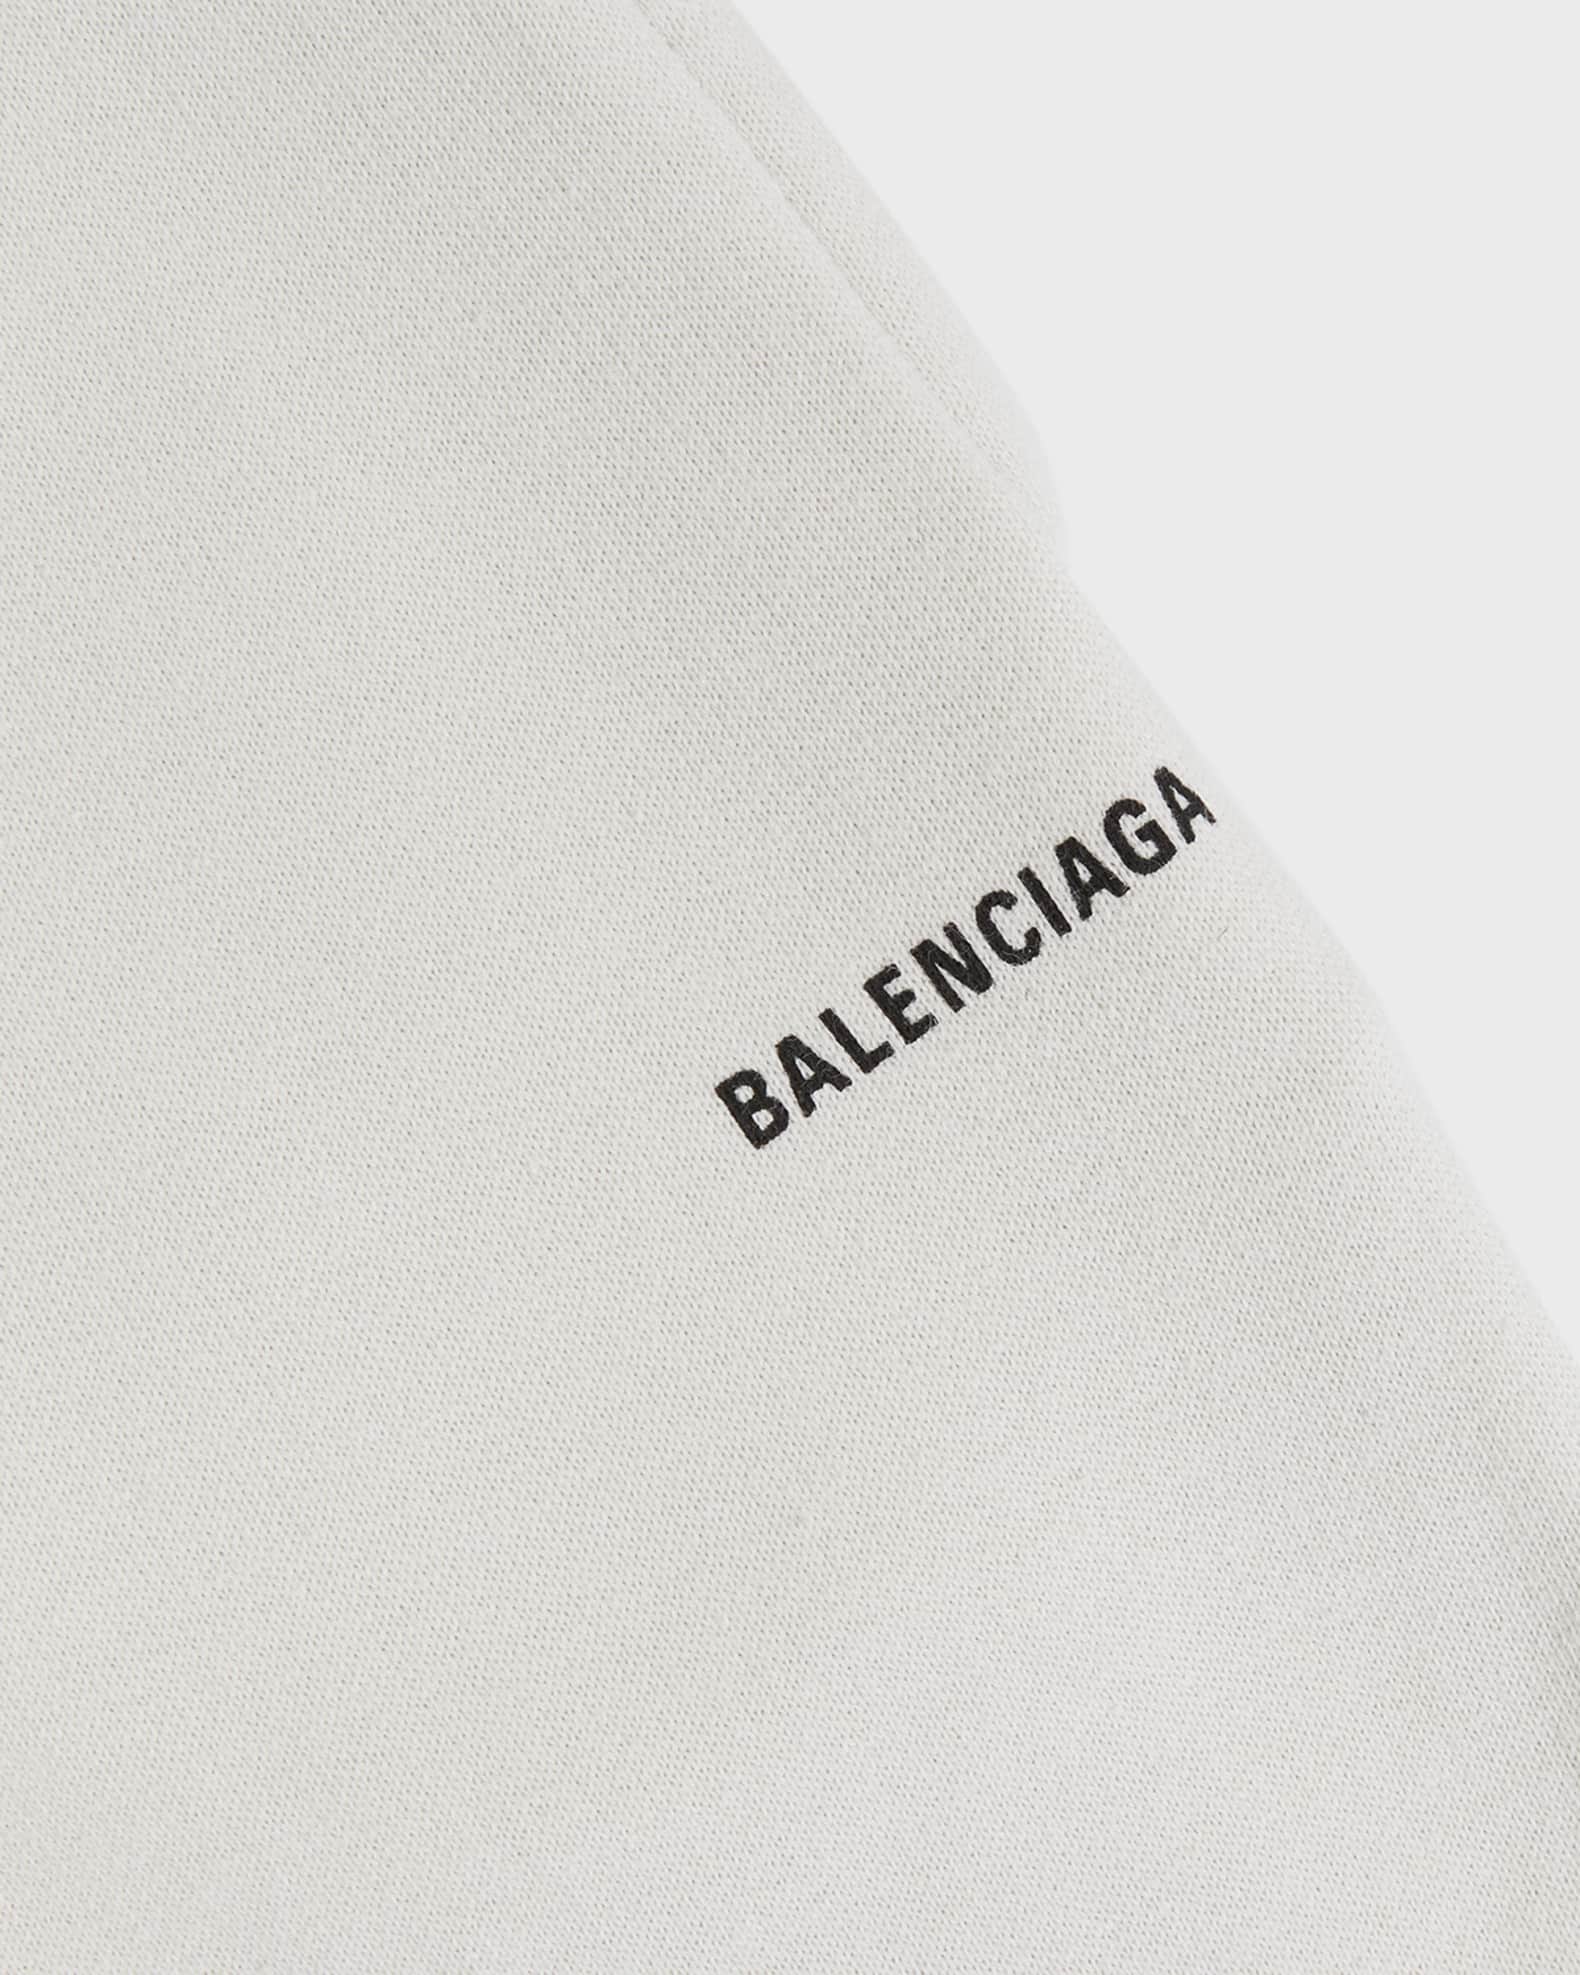 Balenciaga Kid's Logo Sweatpants, Size 2-10 | Neiman Marcus